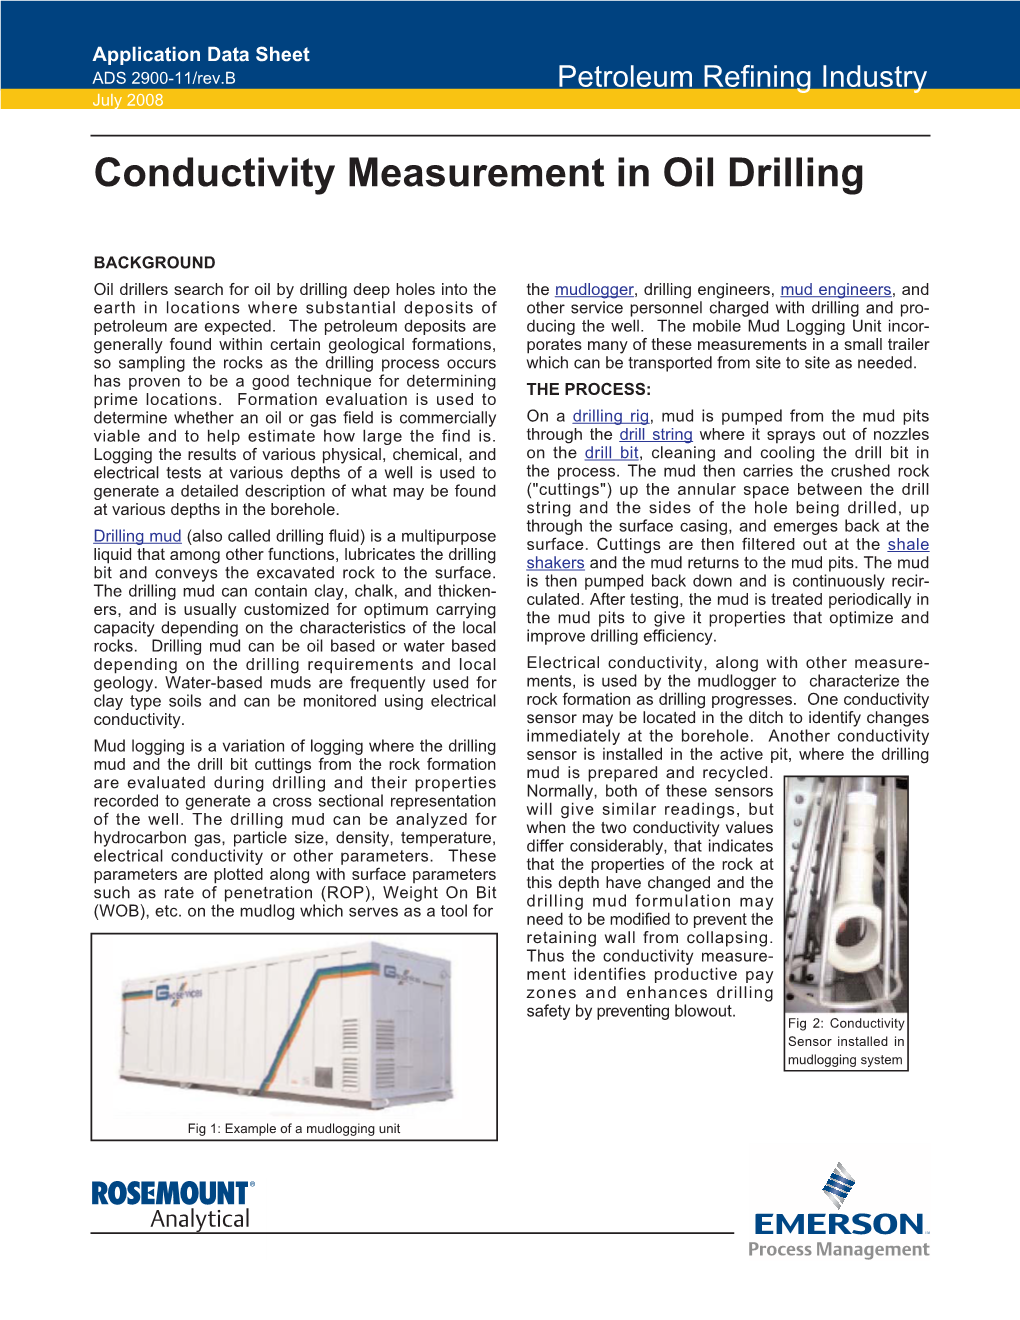 Conductivity Measurement in Oil Drilling